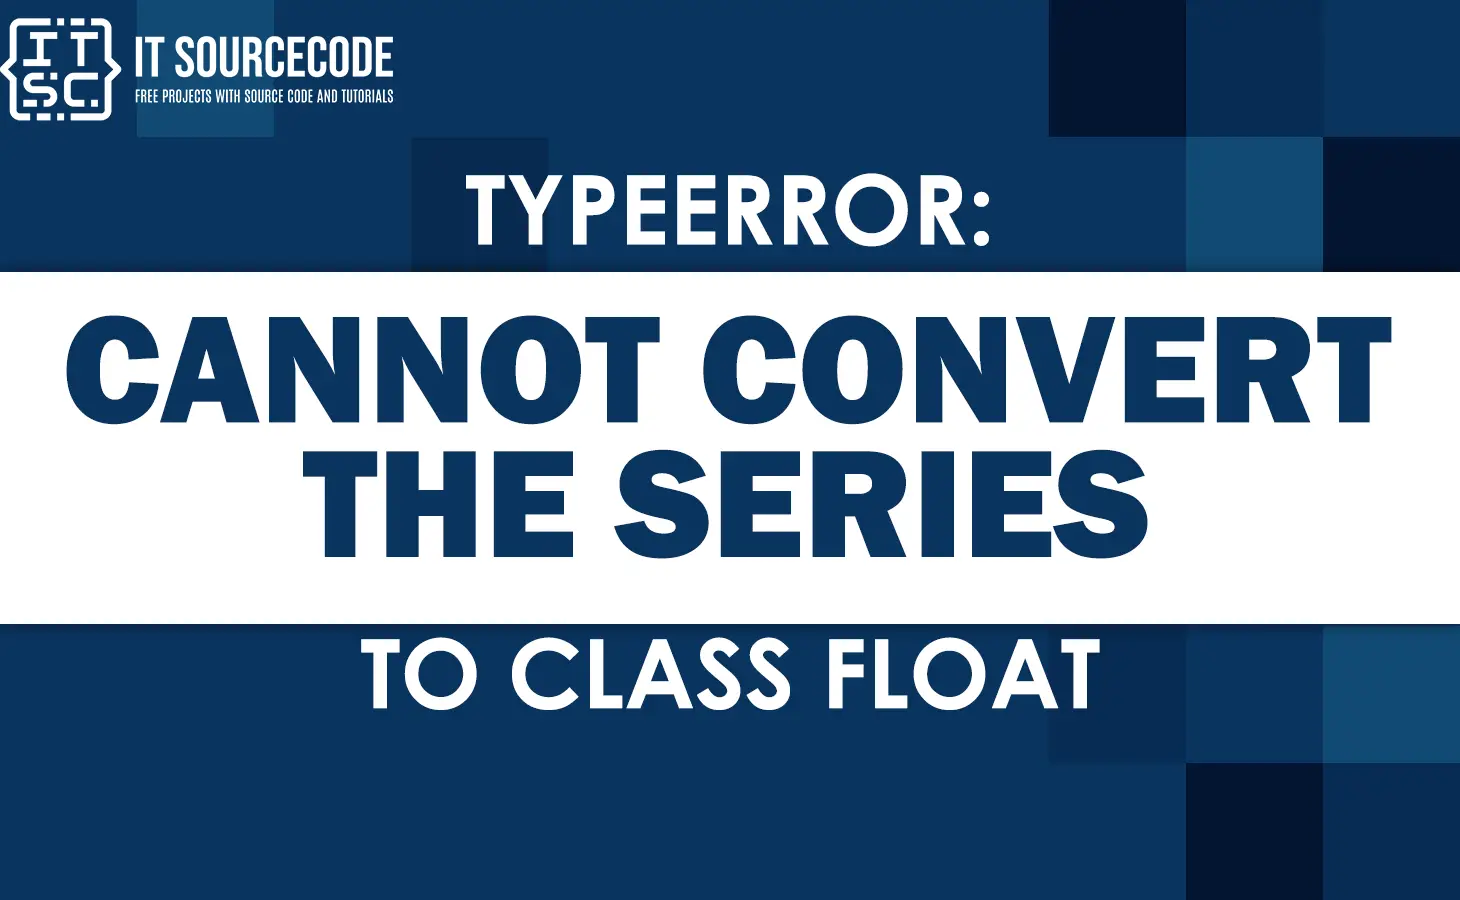 Typeerror cannot convert the series to class float